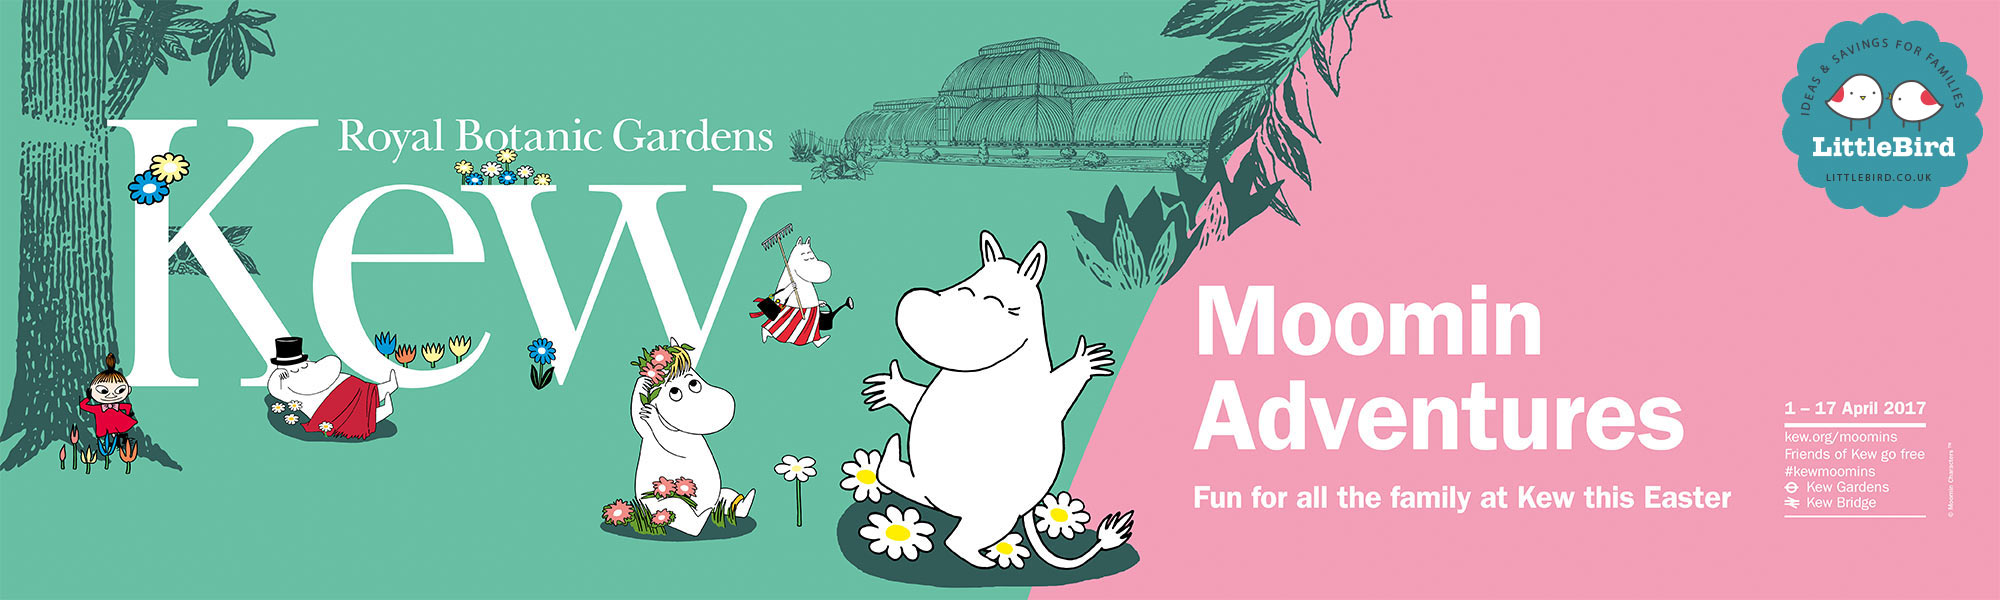 Moomin Adventures at Kew Royal Botanic Gardens